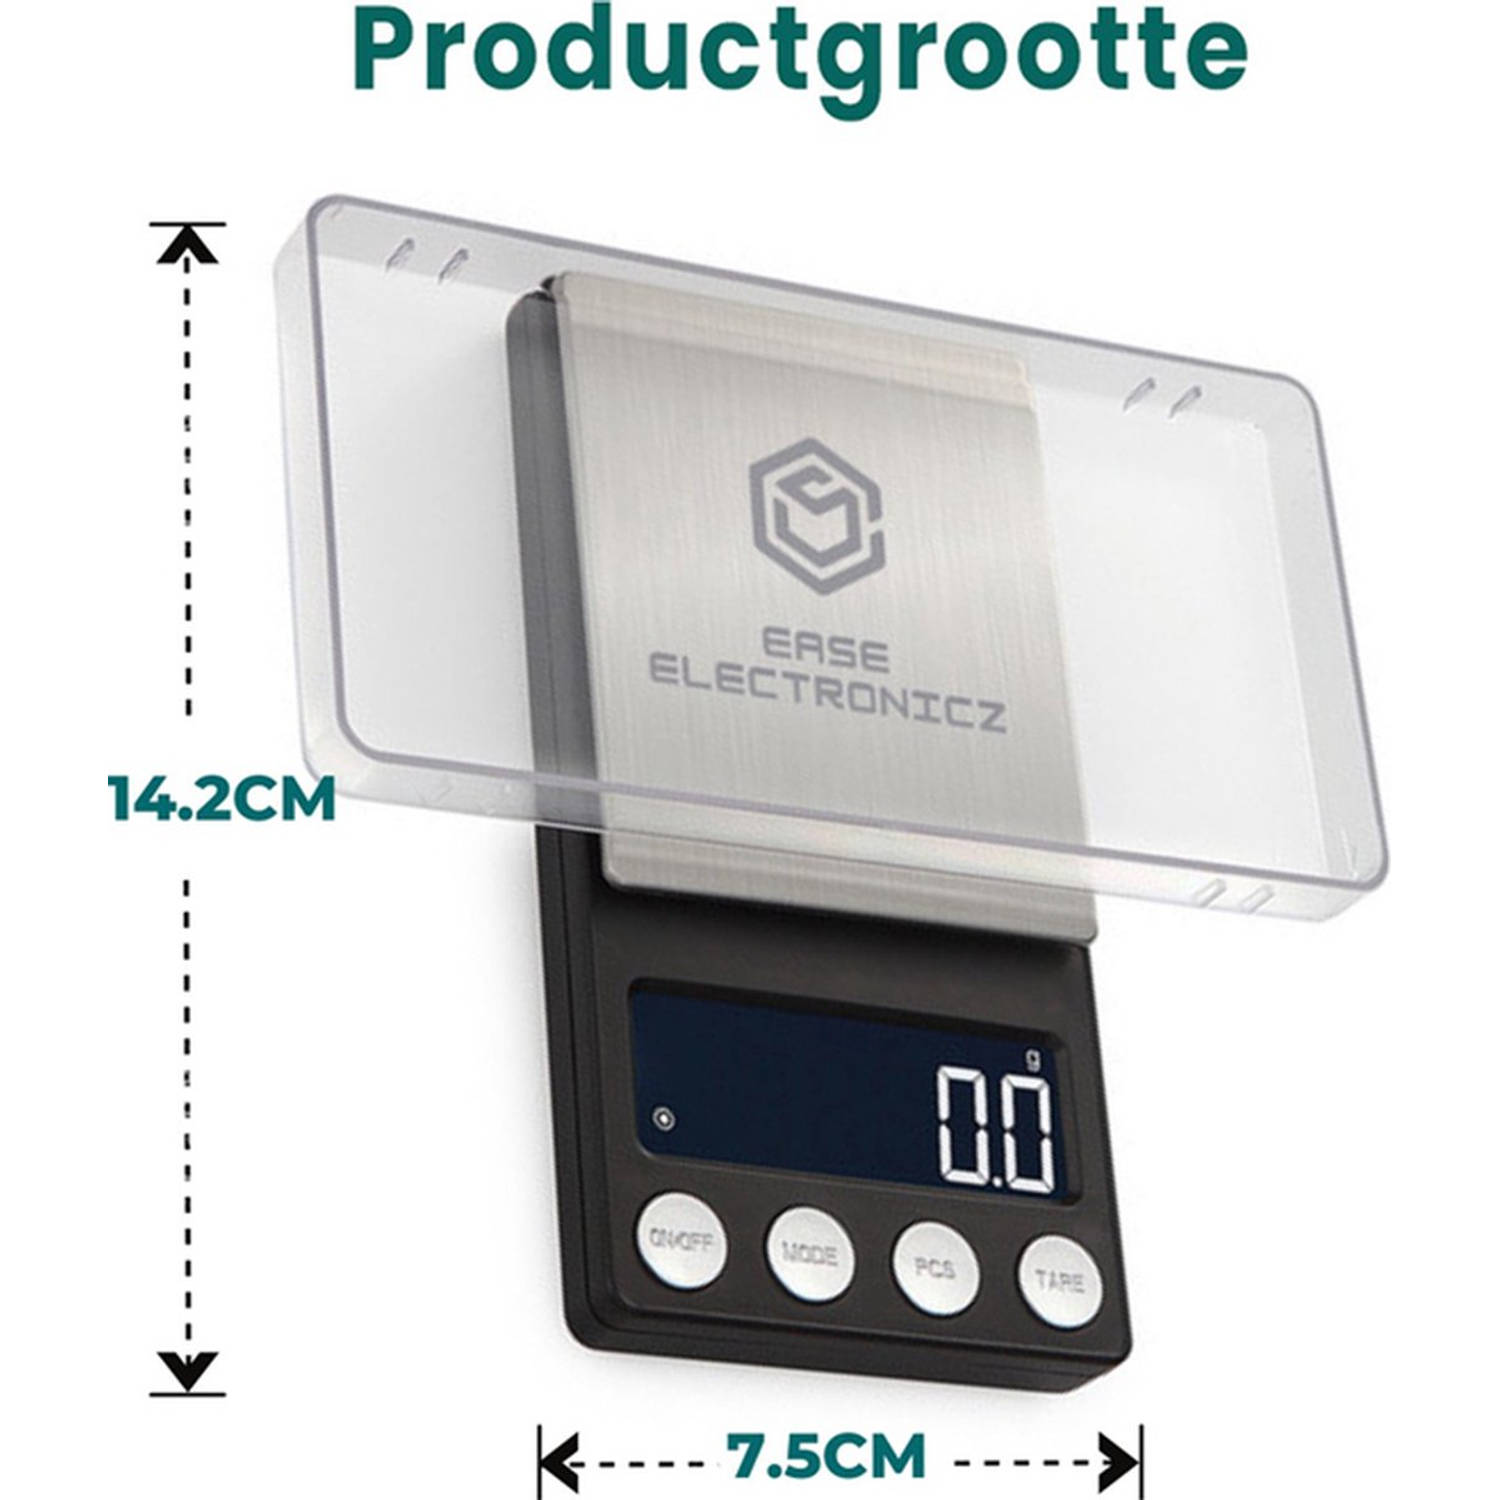 koel Lieve Crack pot Ease Electronicz digitale mini precisie keukenweegschaal - 0,01 tot 200  gram - 14.2 x 7.5 cm - pocket scale op batterij | Blokker